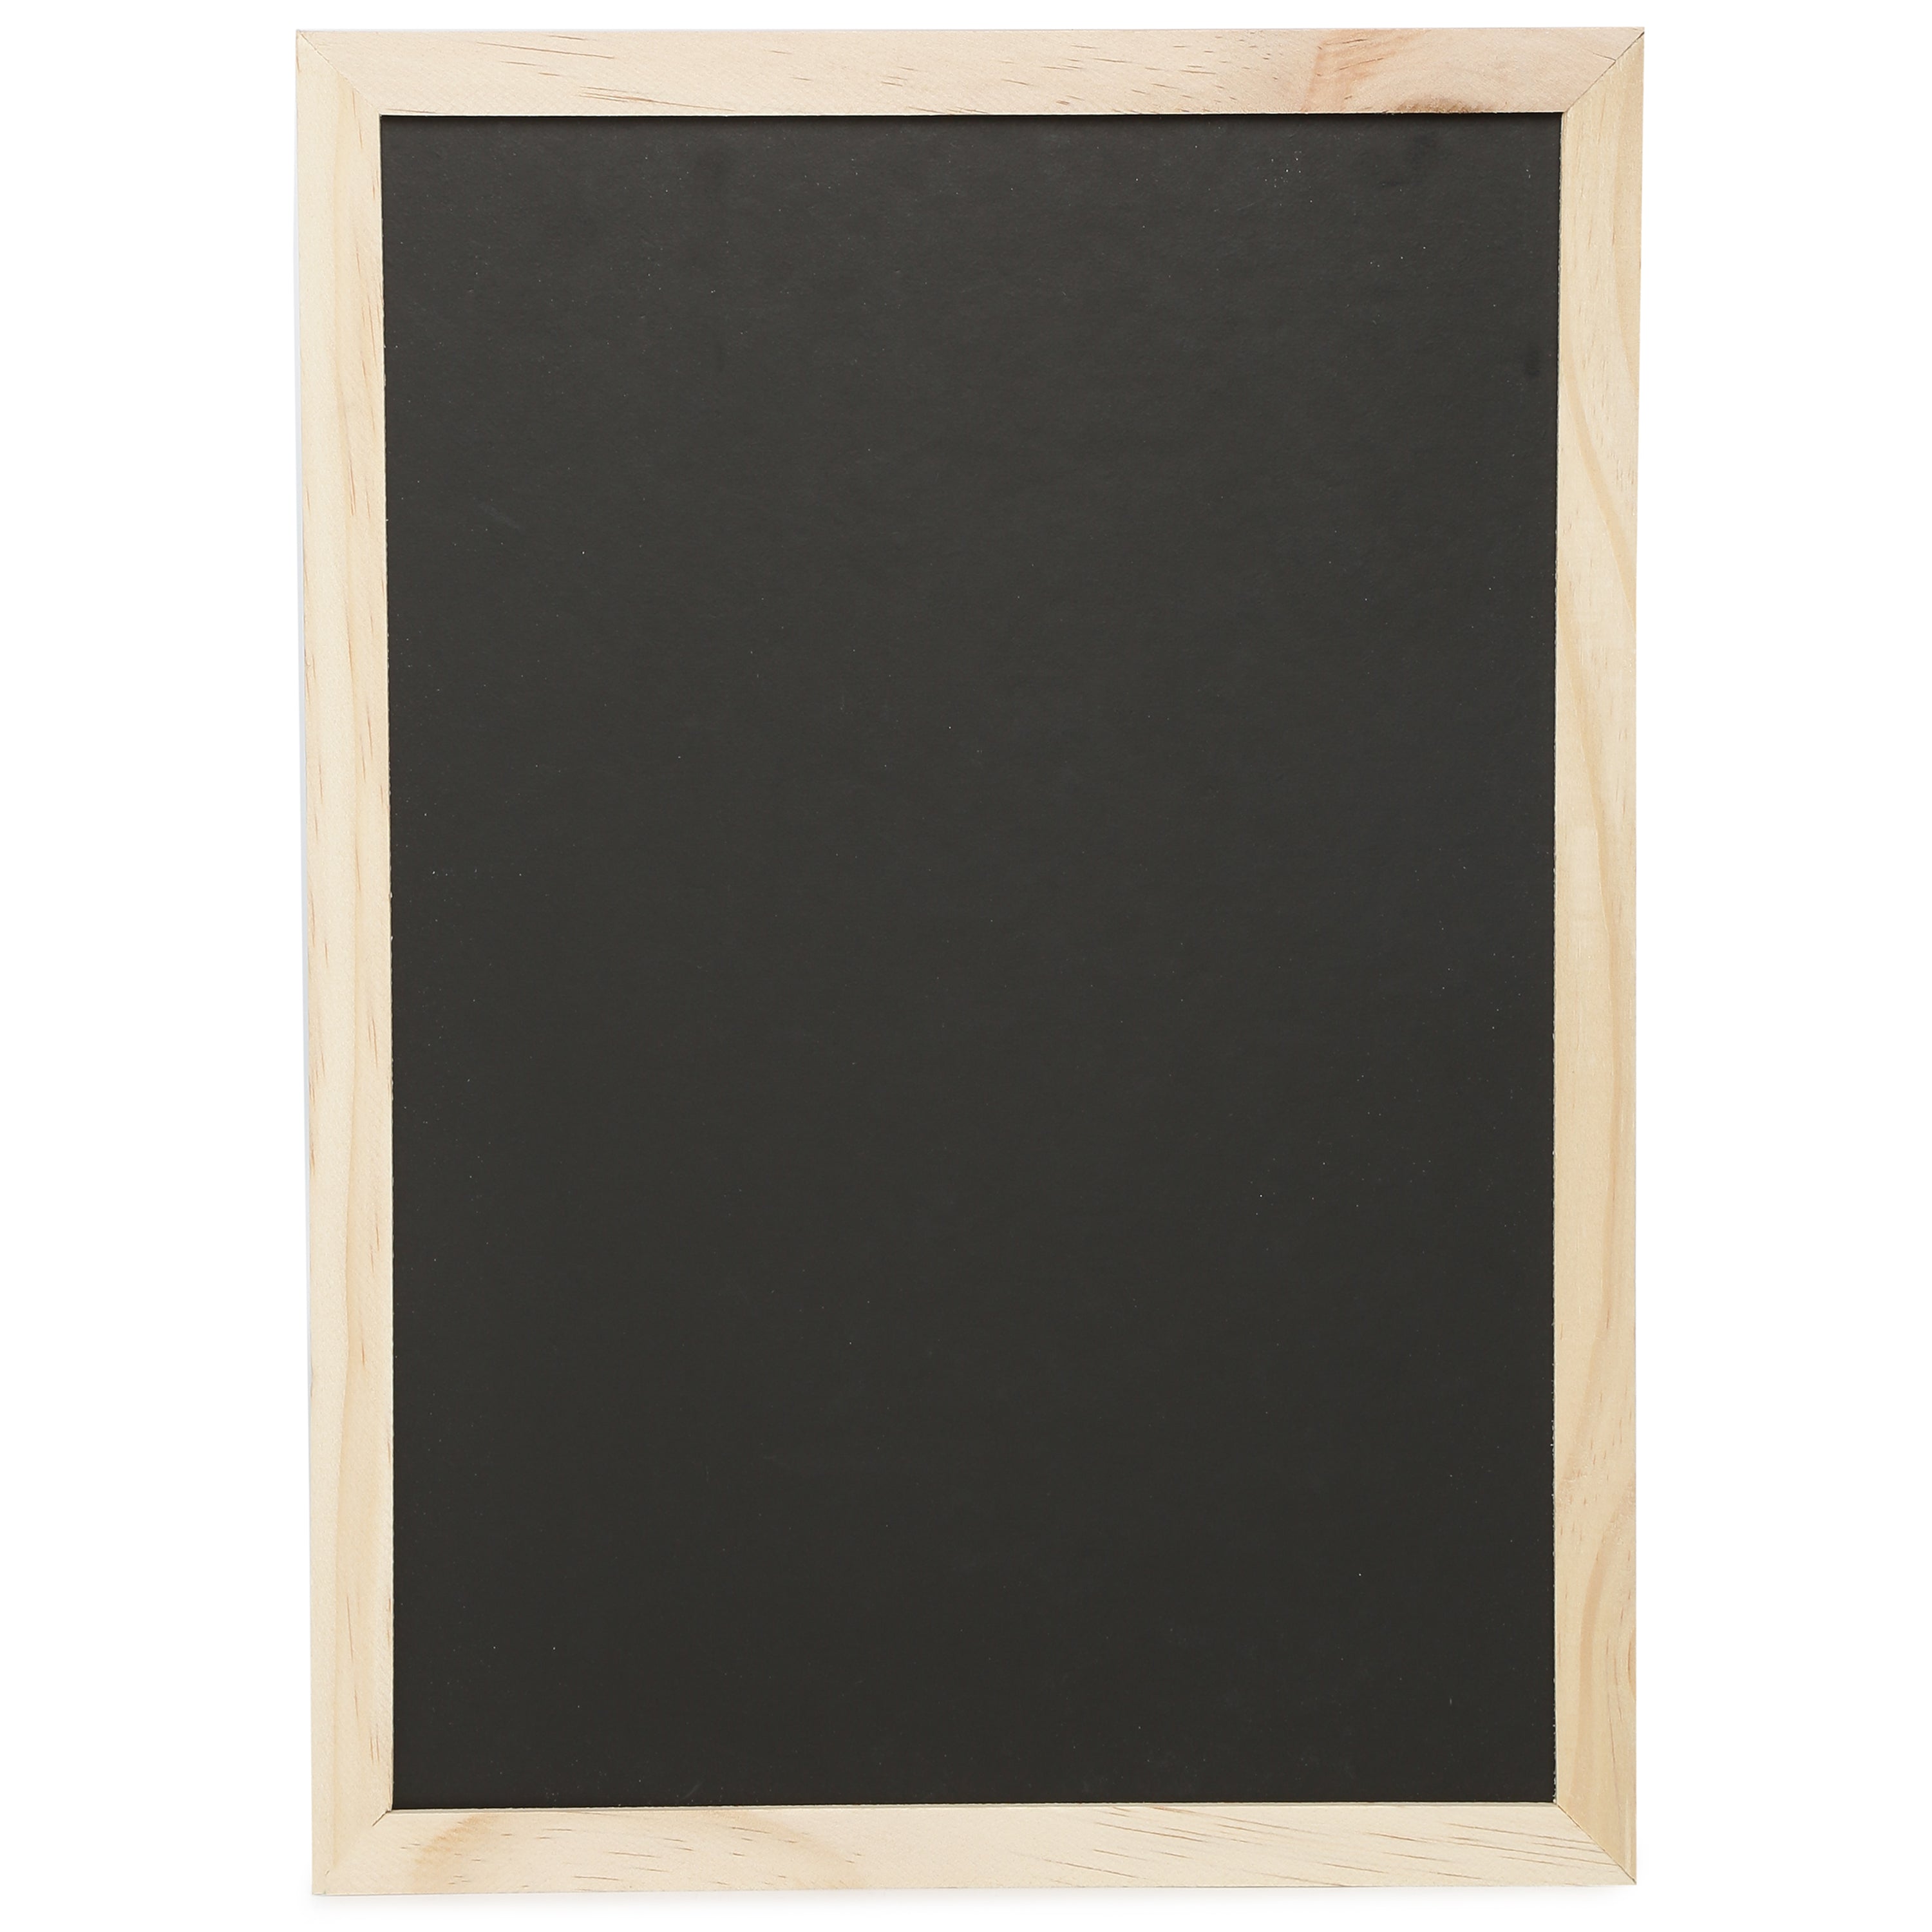 White And Black Board 25 X 35Cm 1Set Ib